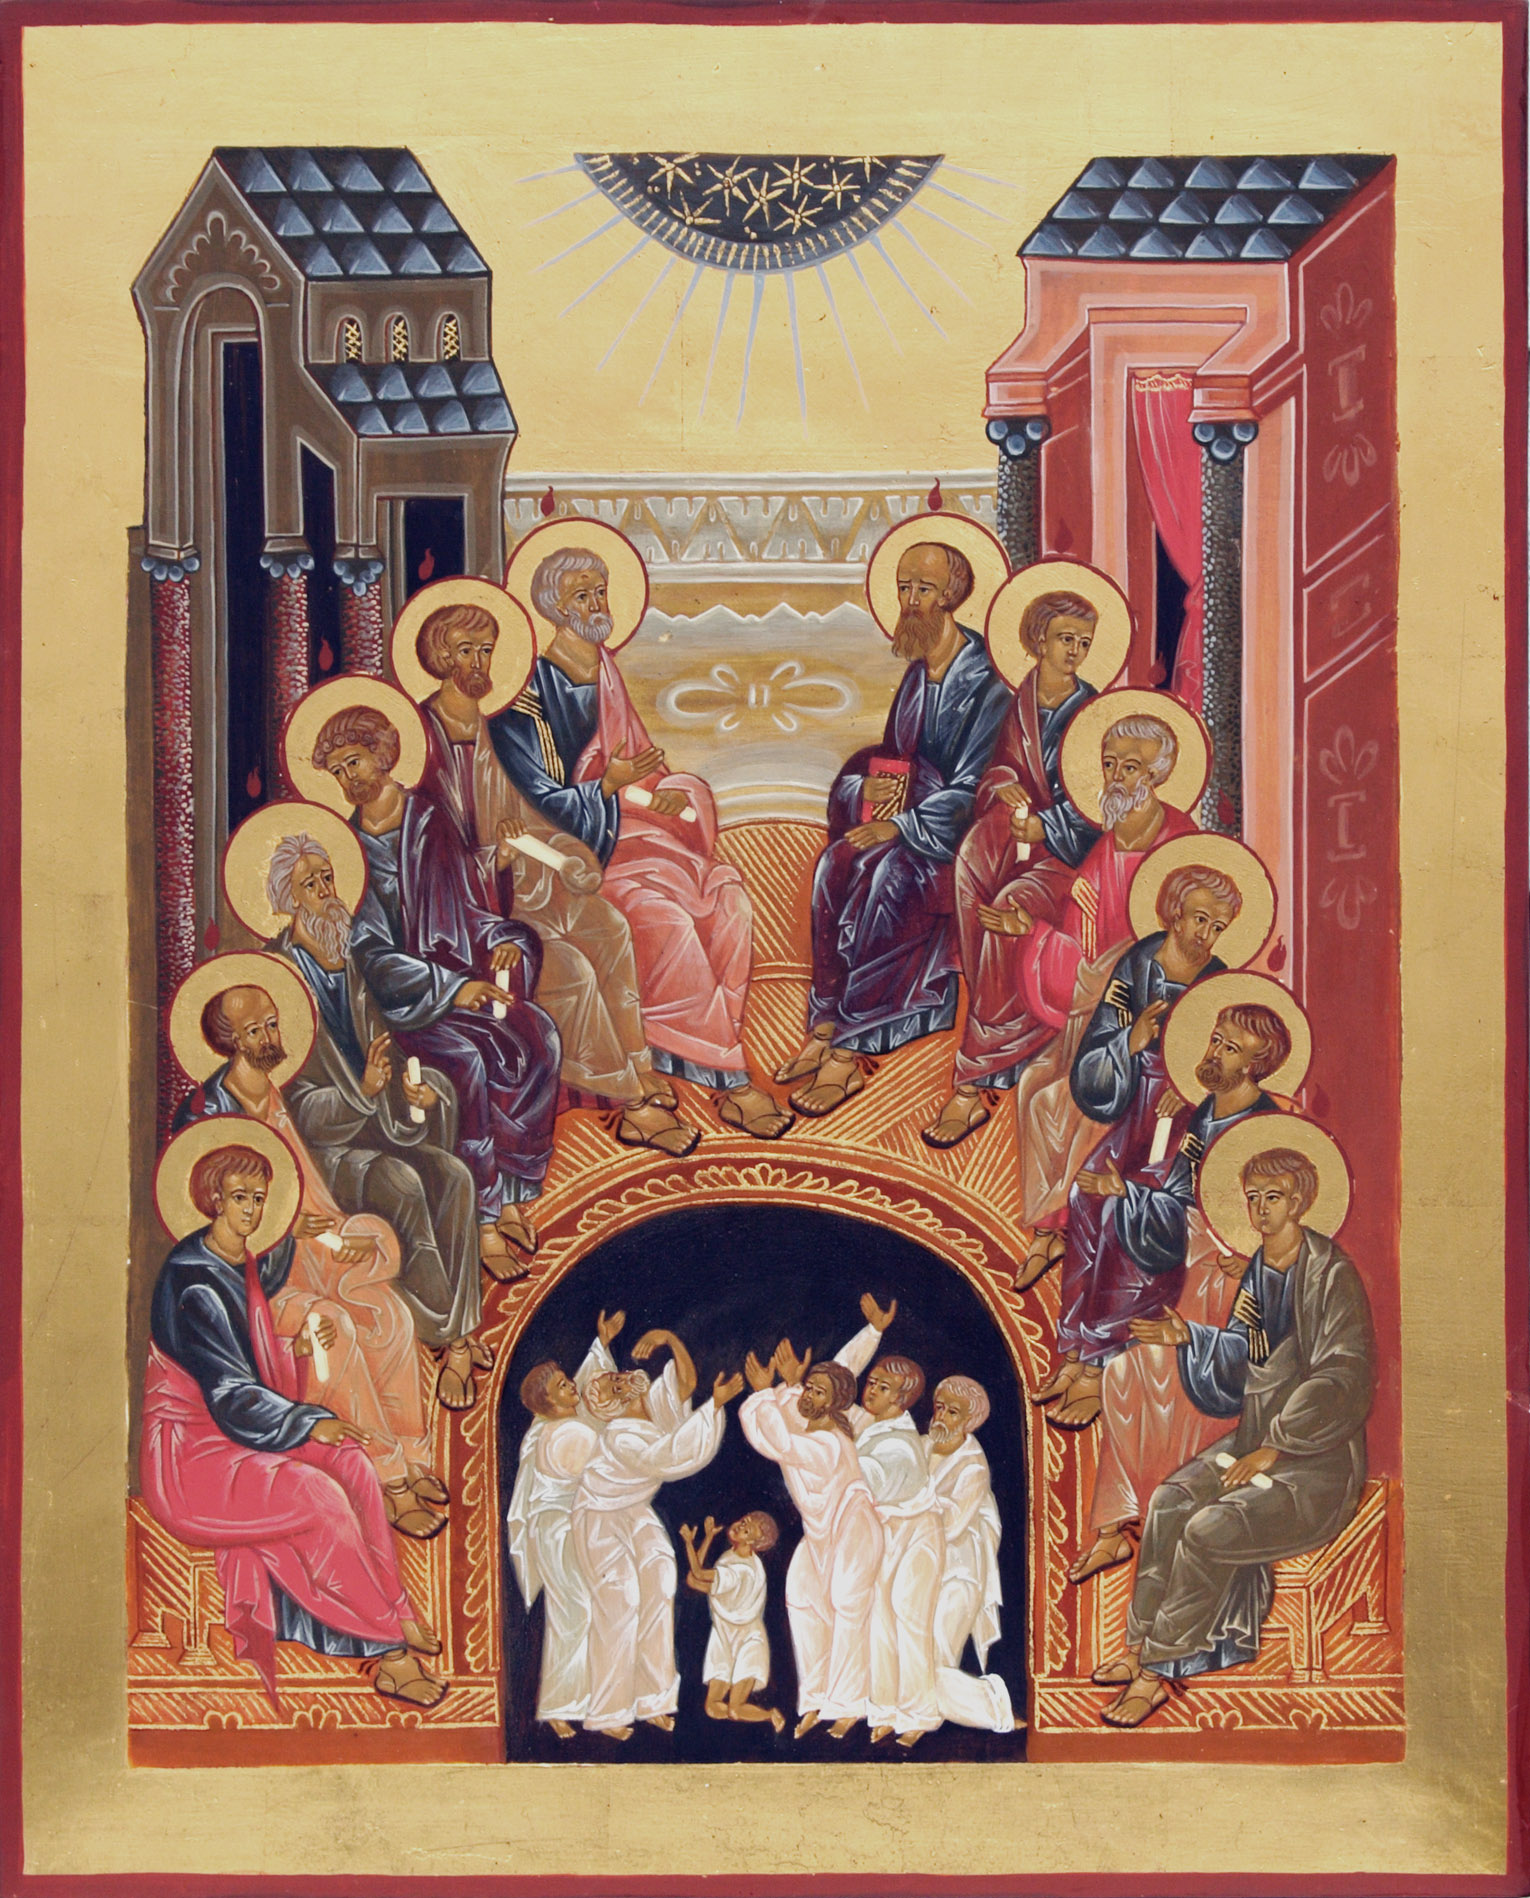 The Feast of Pentecost The Community of Jesus